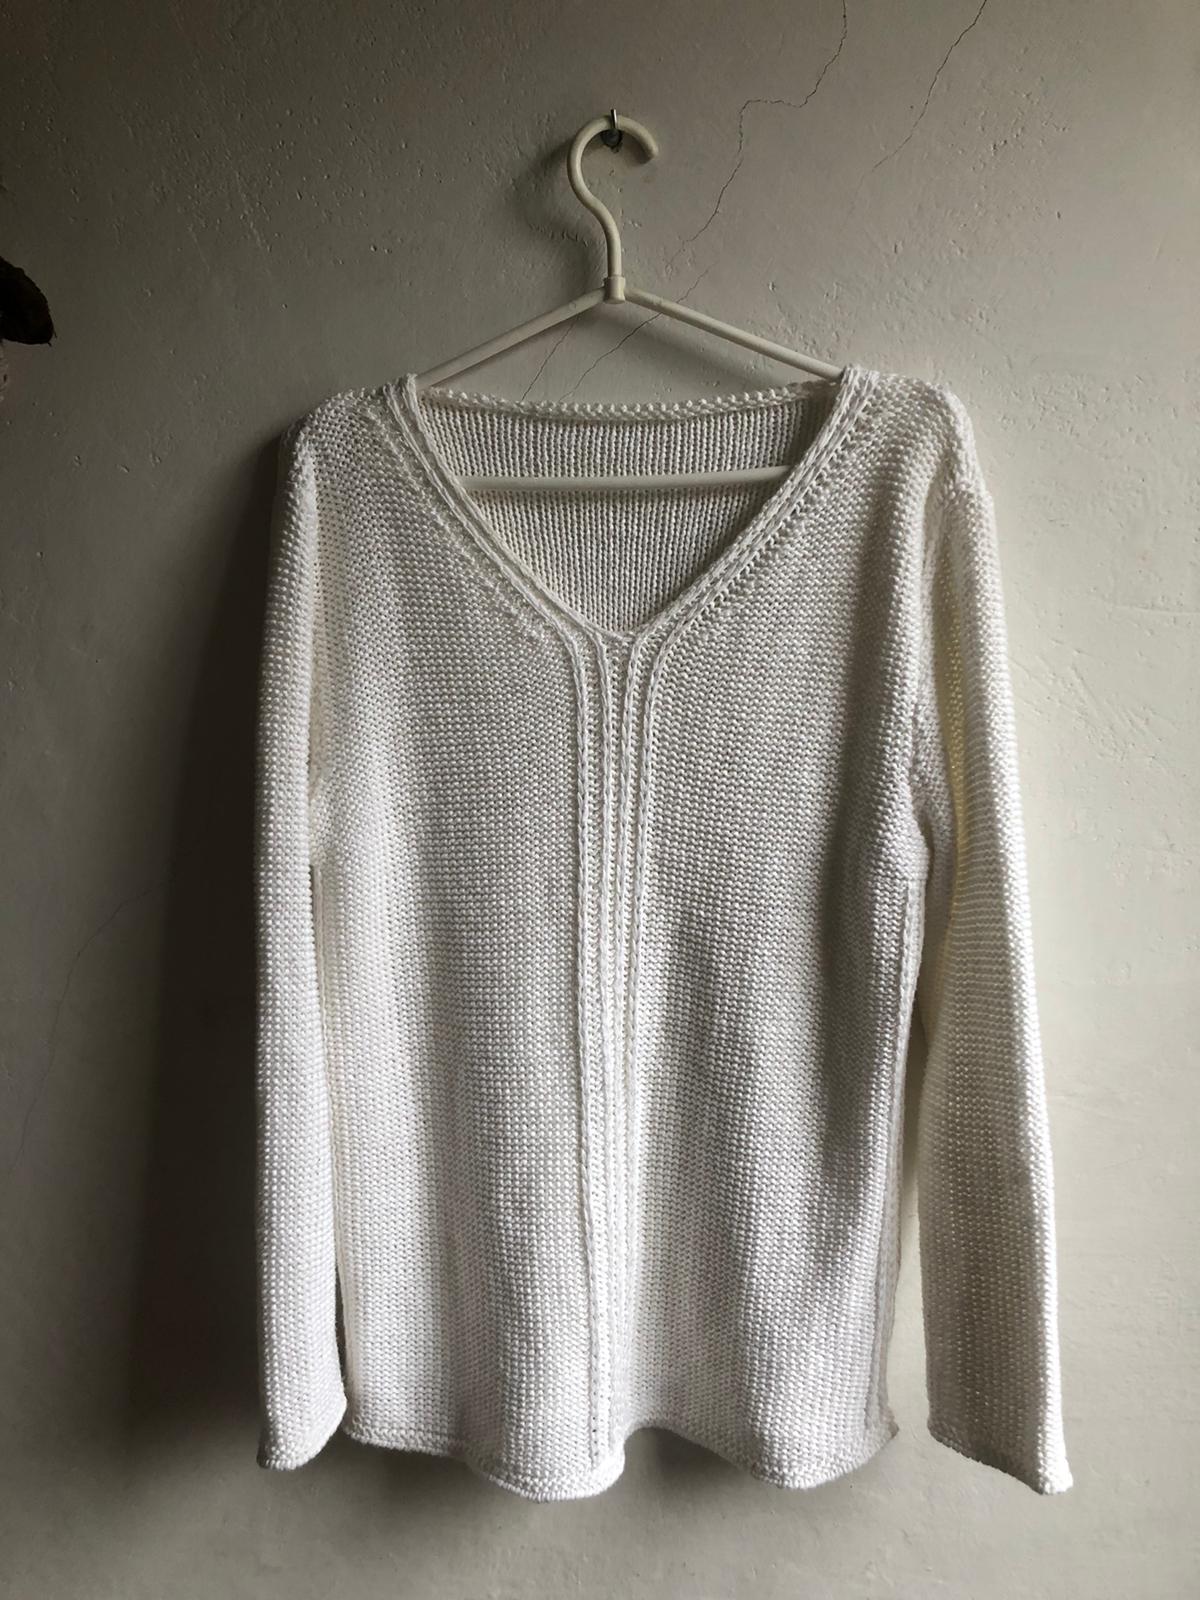 Vintage 90s White Color 100% Acrylic Sweater Hippie Boho Grunge Size L